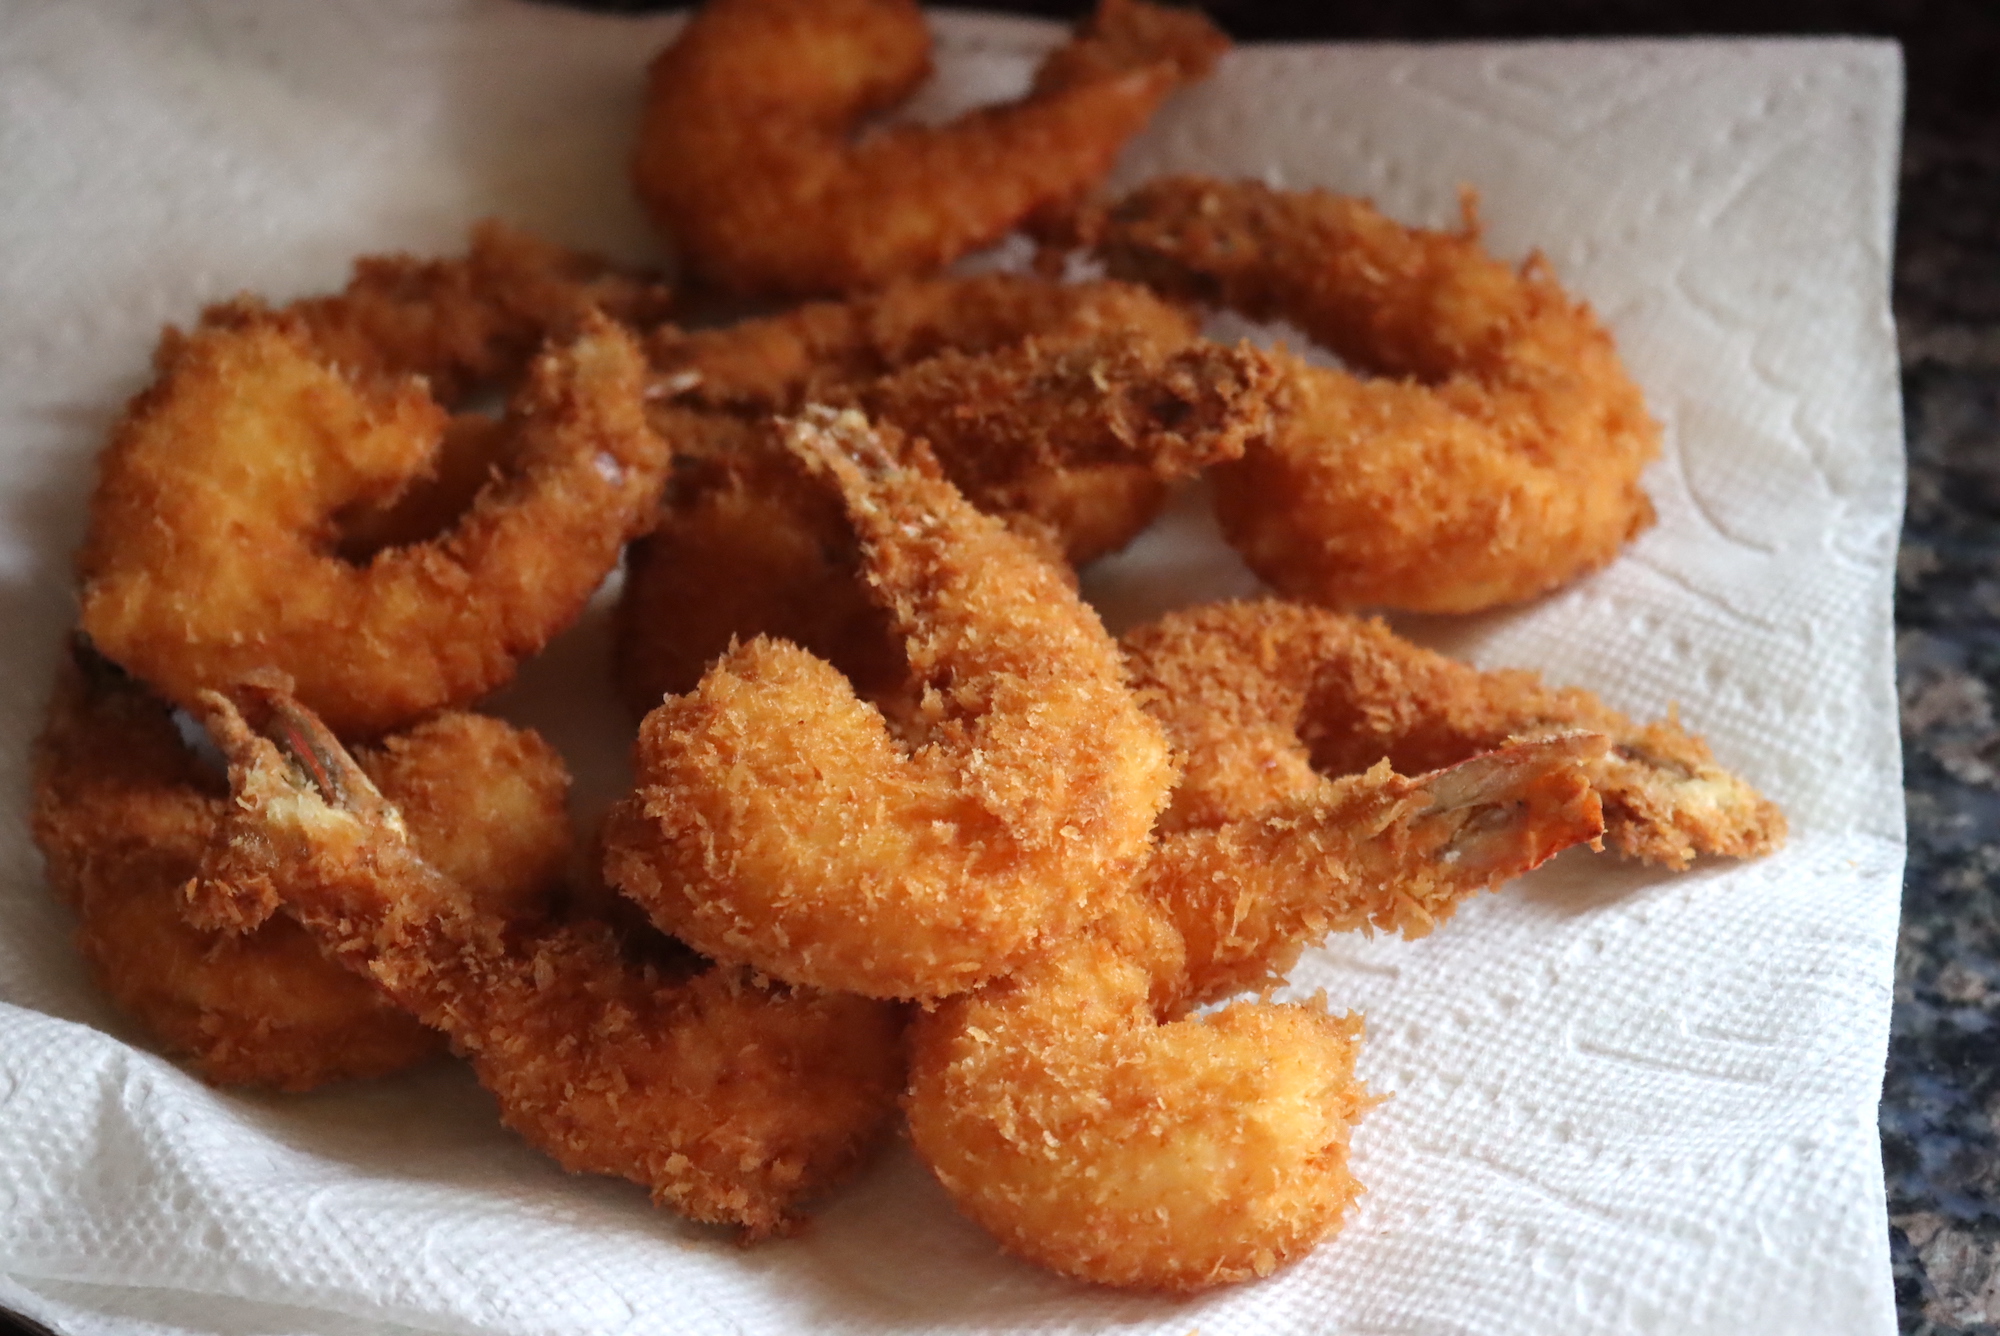 Draining Fried Shrimp after Frying